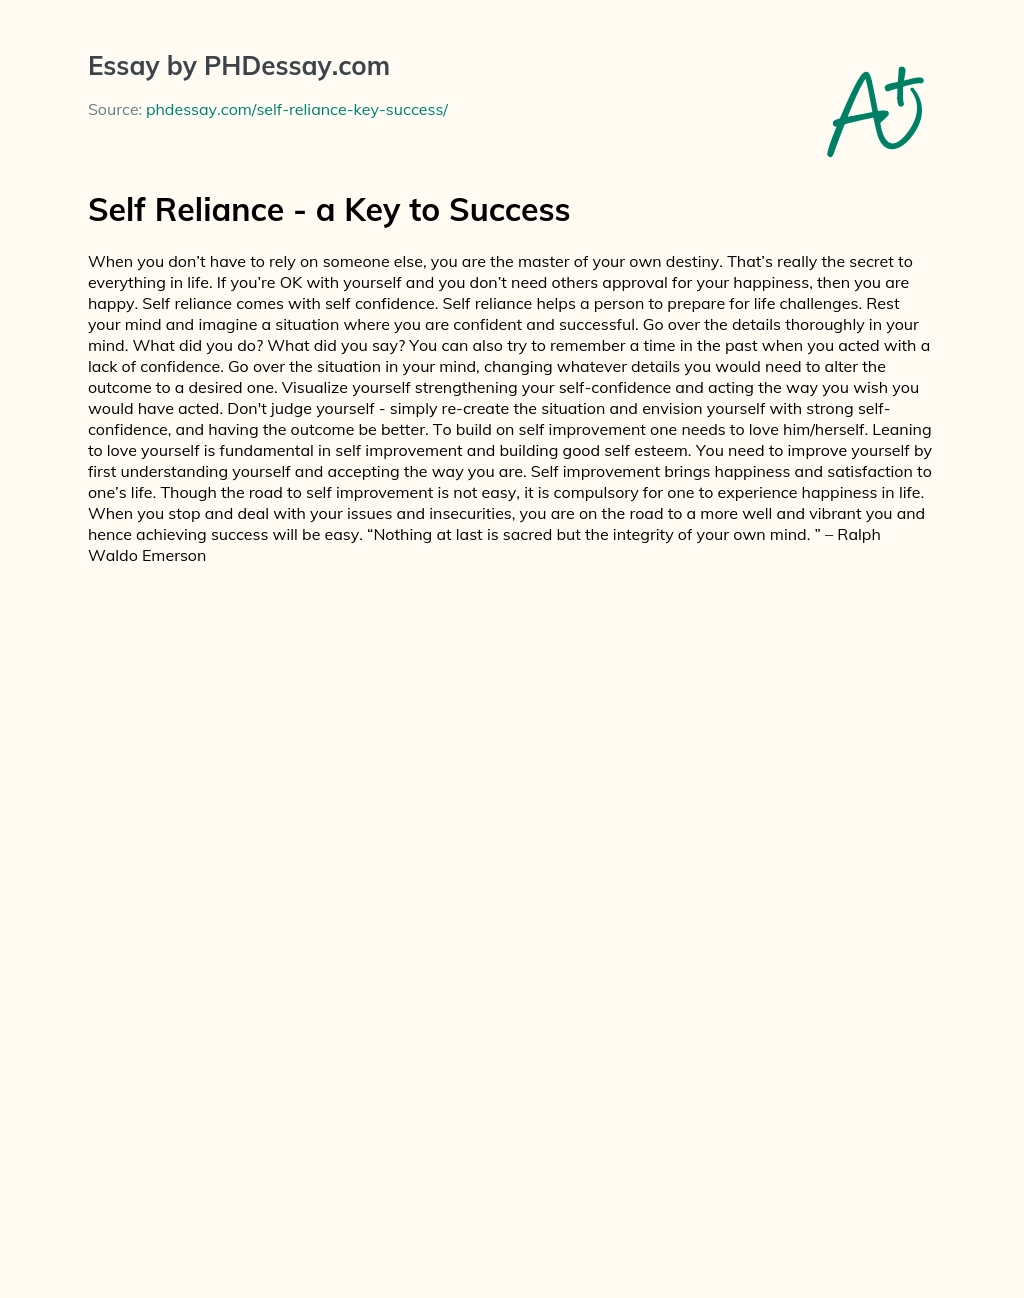 Self Reliance – a Key to Success essay